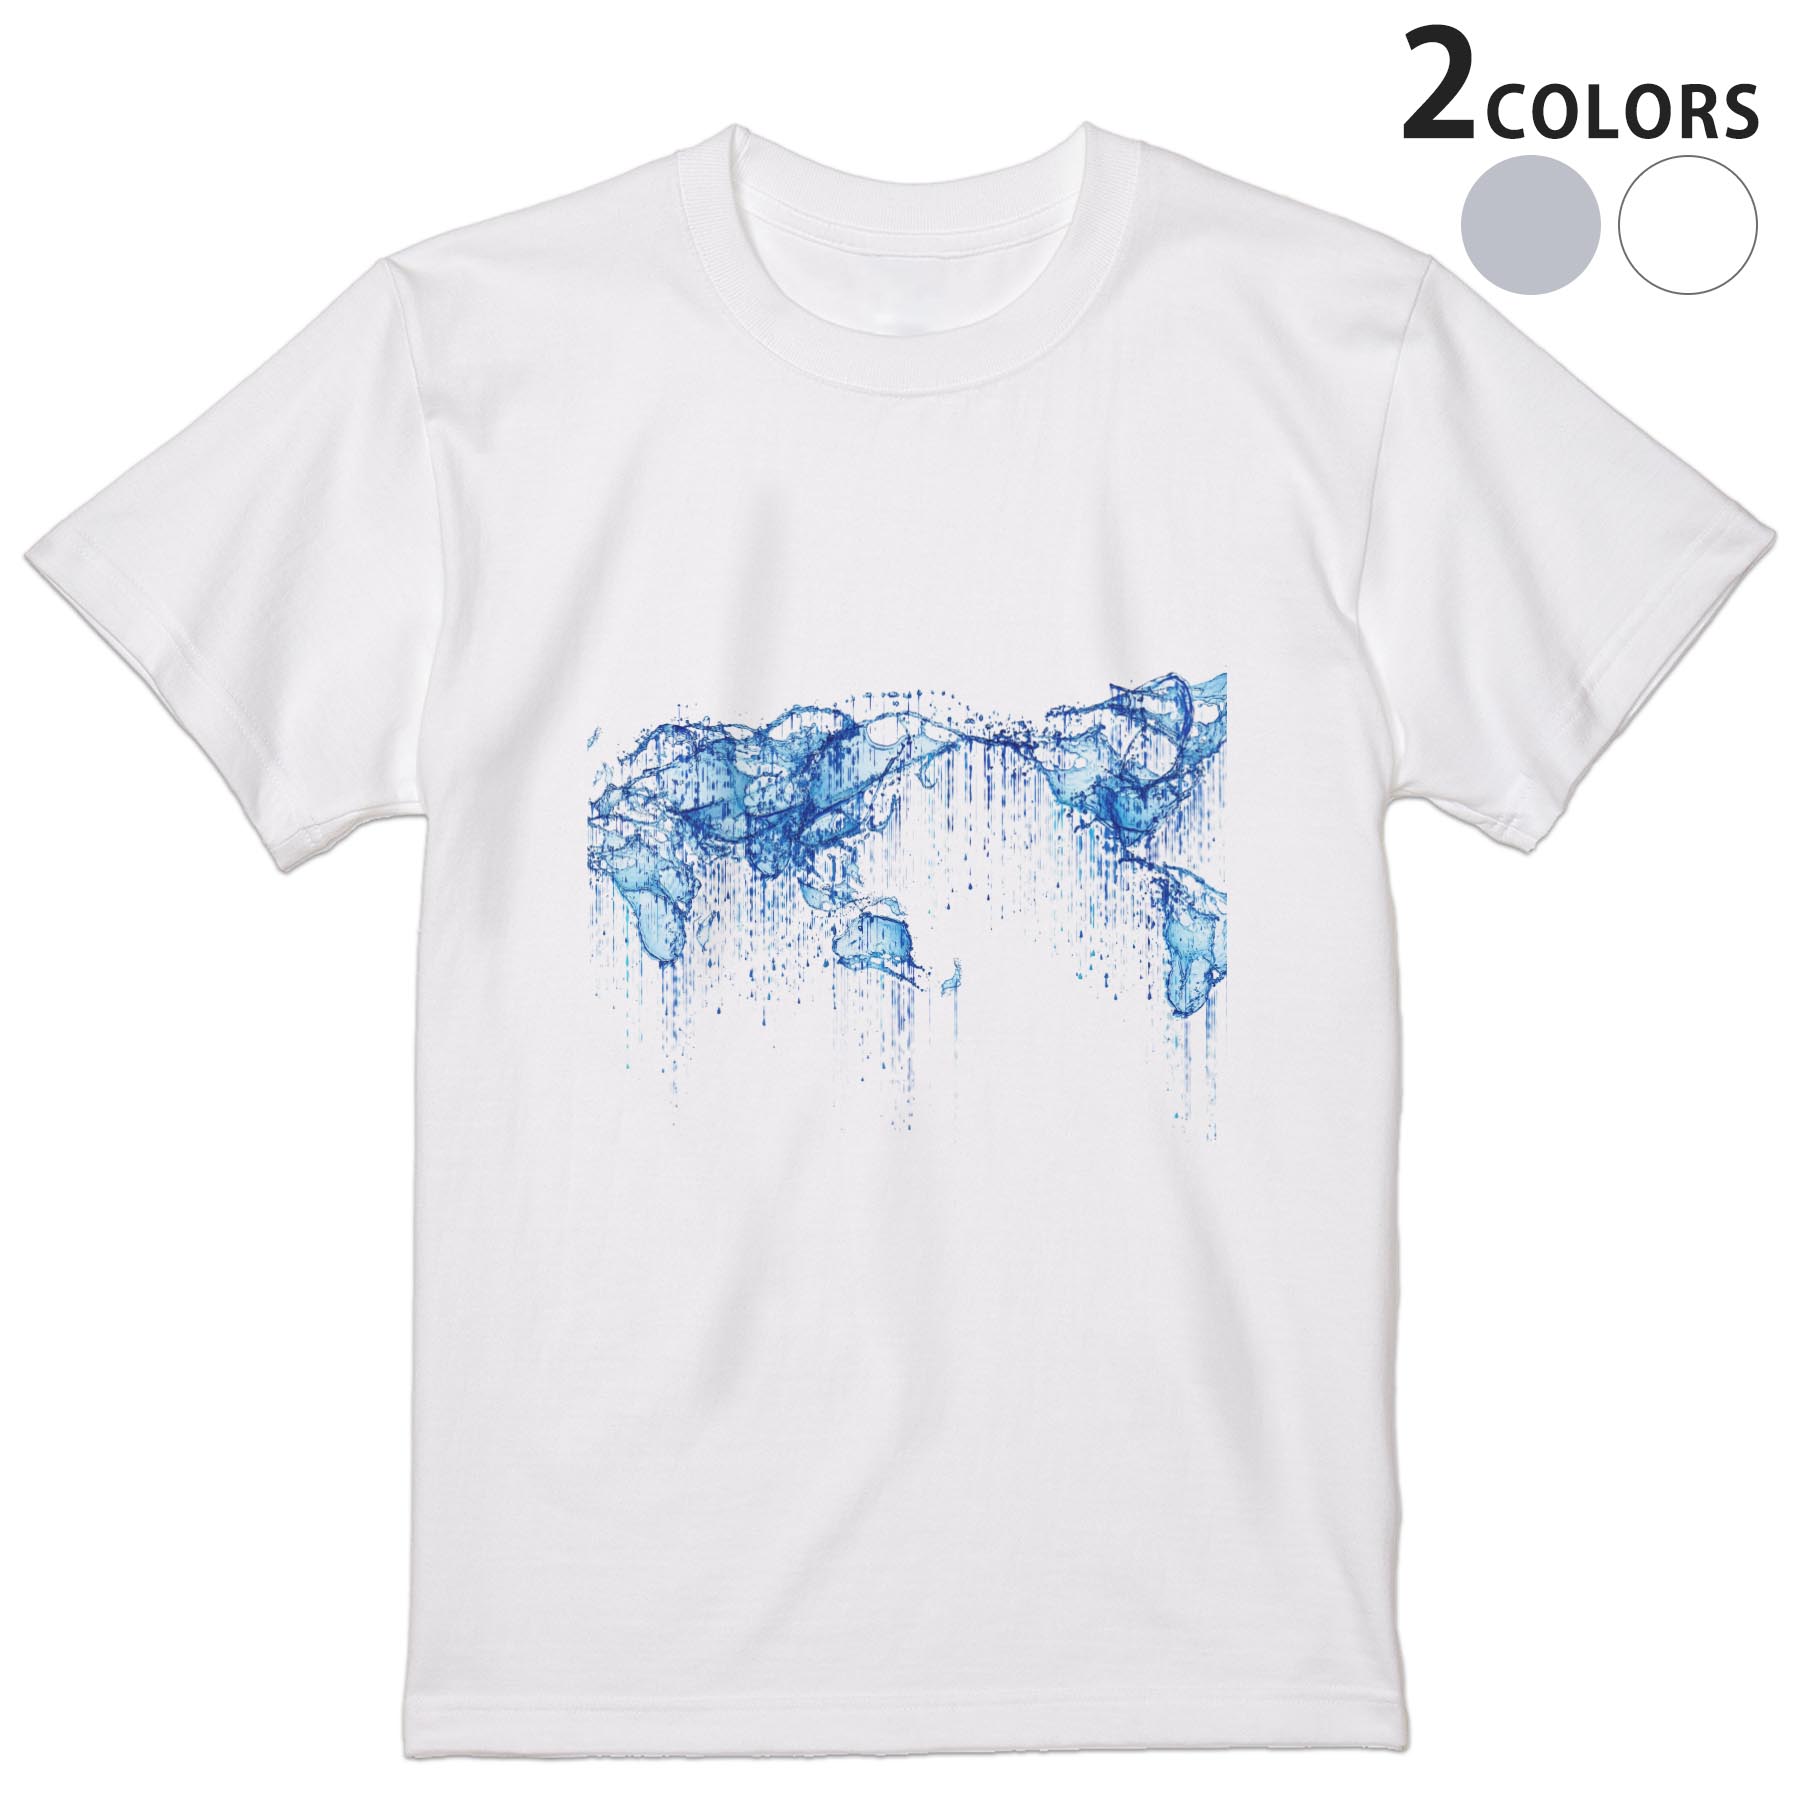 Tシャツ メンズ 半袖 ホワイト グレー デザイン S M L XL 2XL Tシャツ ティーシャツ T shirt 015979 世界地図　水滴